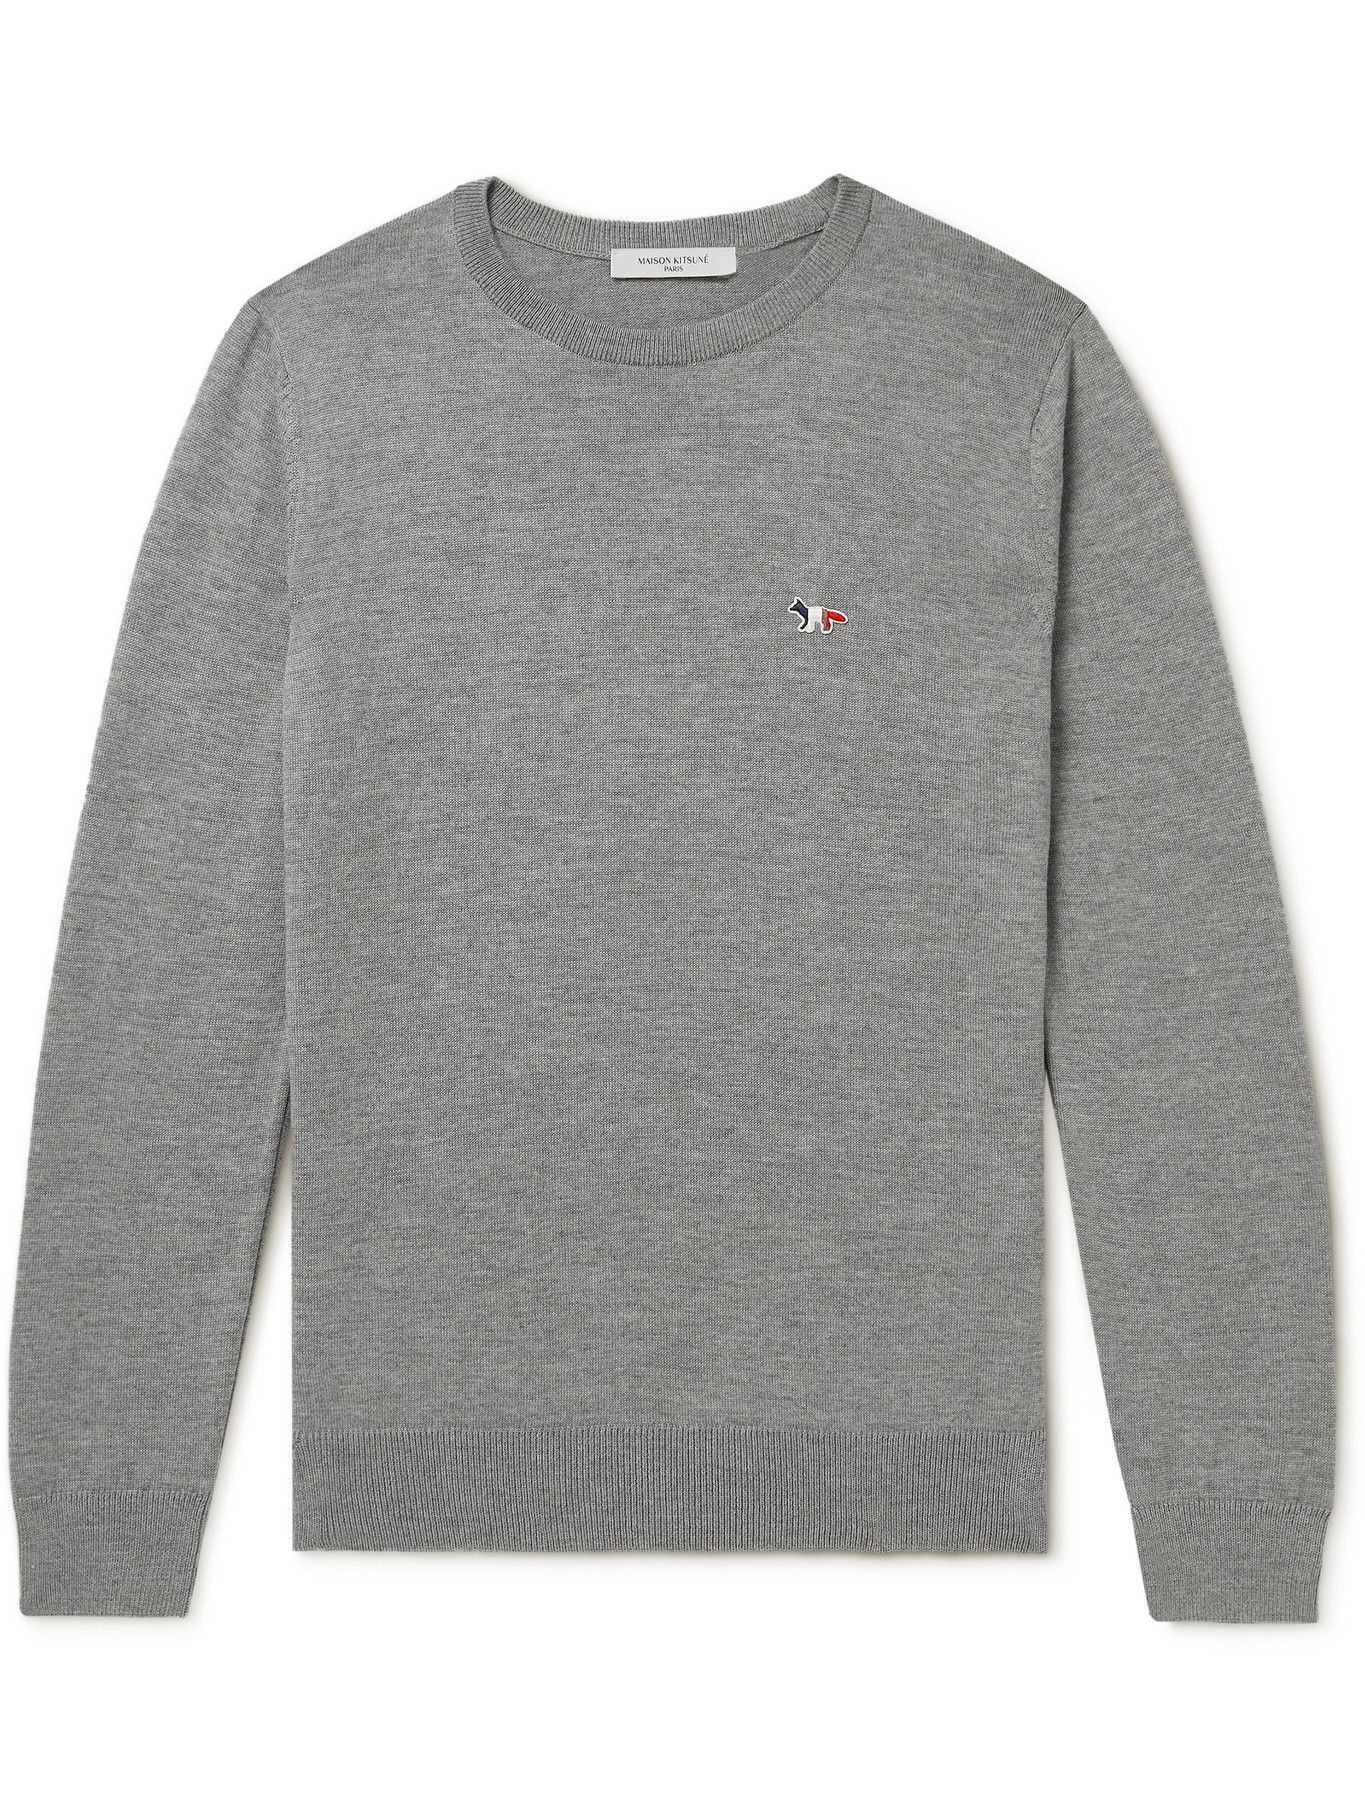 MAISON KITSUNÉ - Slim-Fit Logo-Appliquéd Wool Sweater - Gray Maison Kitsune